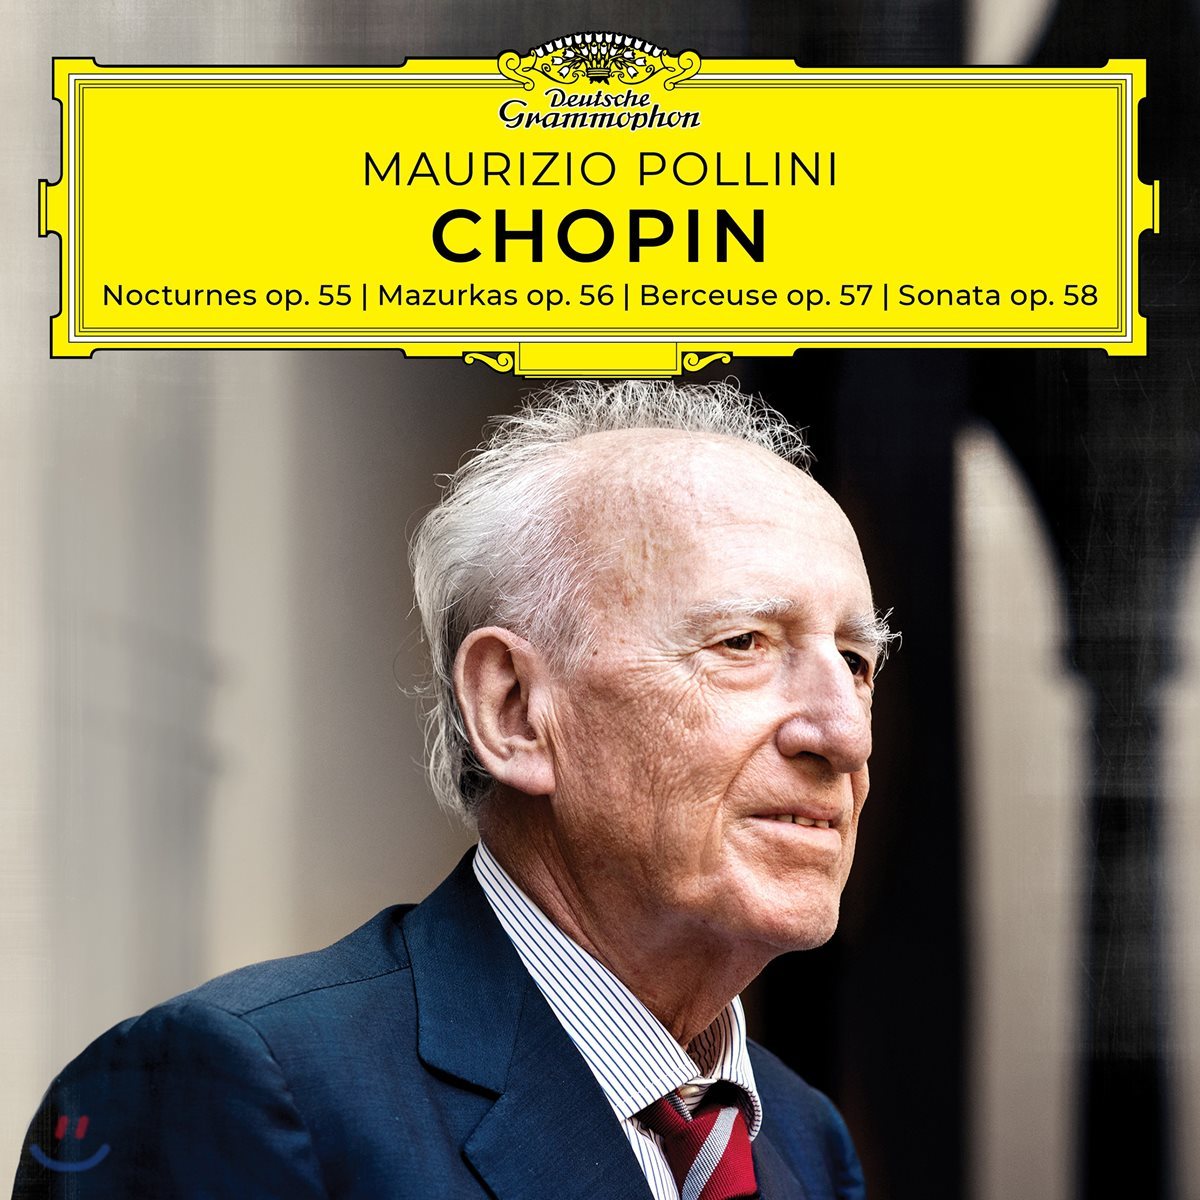 Maurizio Pollini 쇼팽: 녹턴, 마주르카 (Chopin: Nocturnes, Mazurkas, Berceuse, Sonata, Op. 55-58)